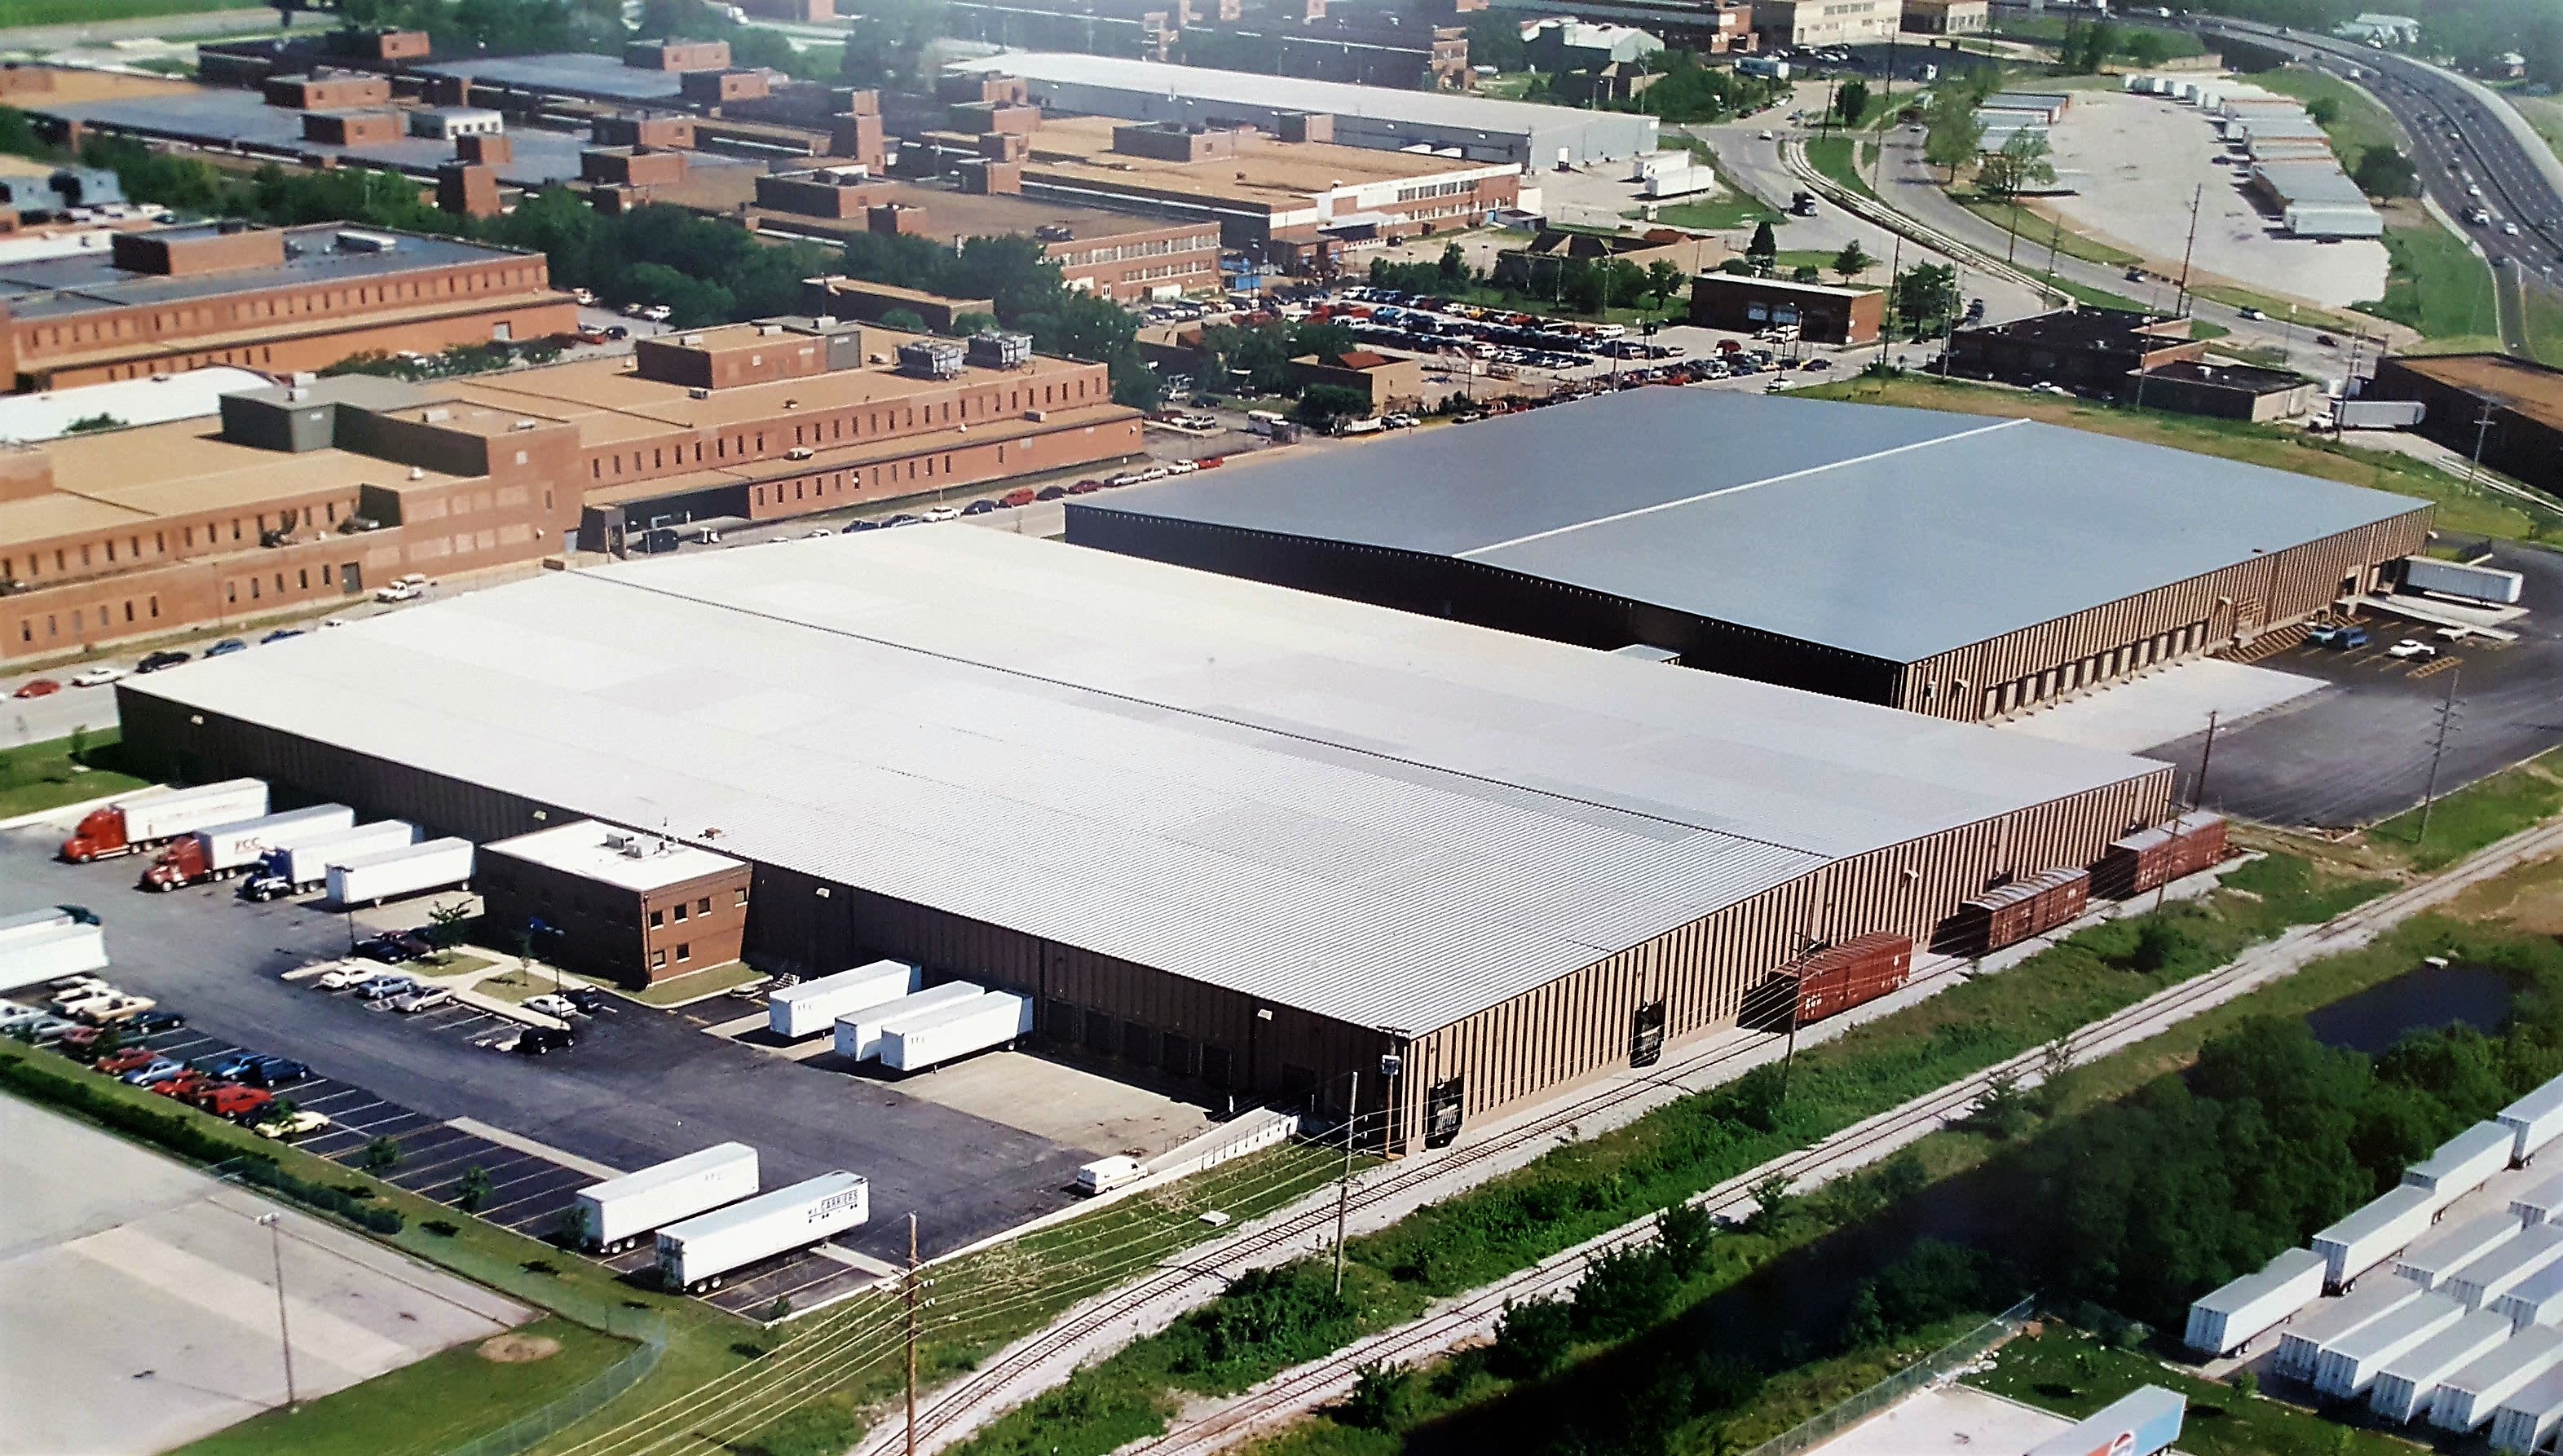 Hilliker Sells $7 Million+ of Warehouse Buildings